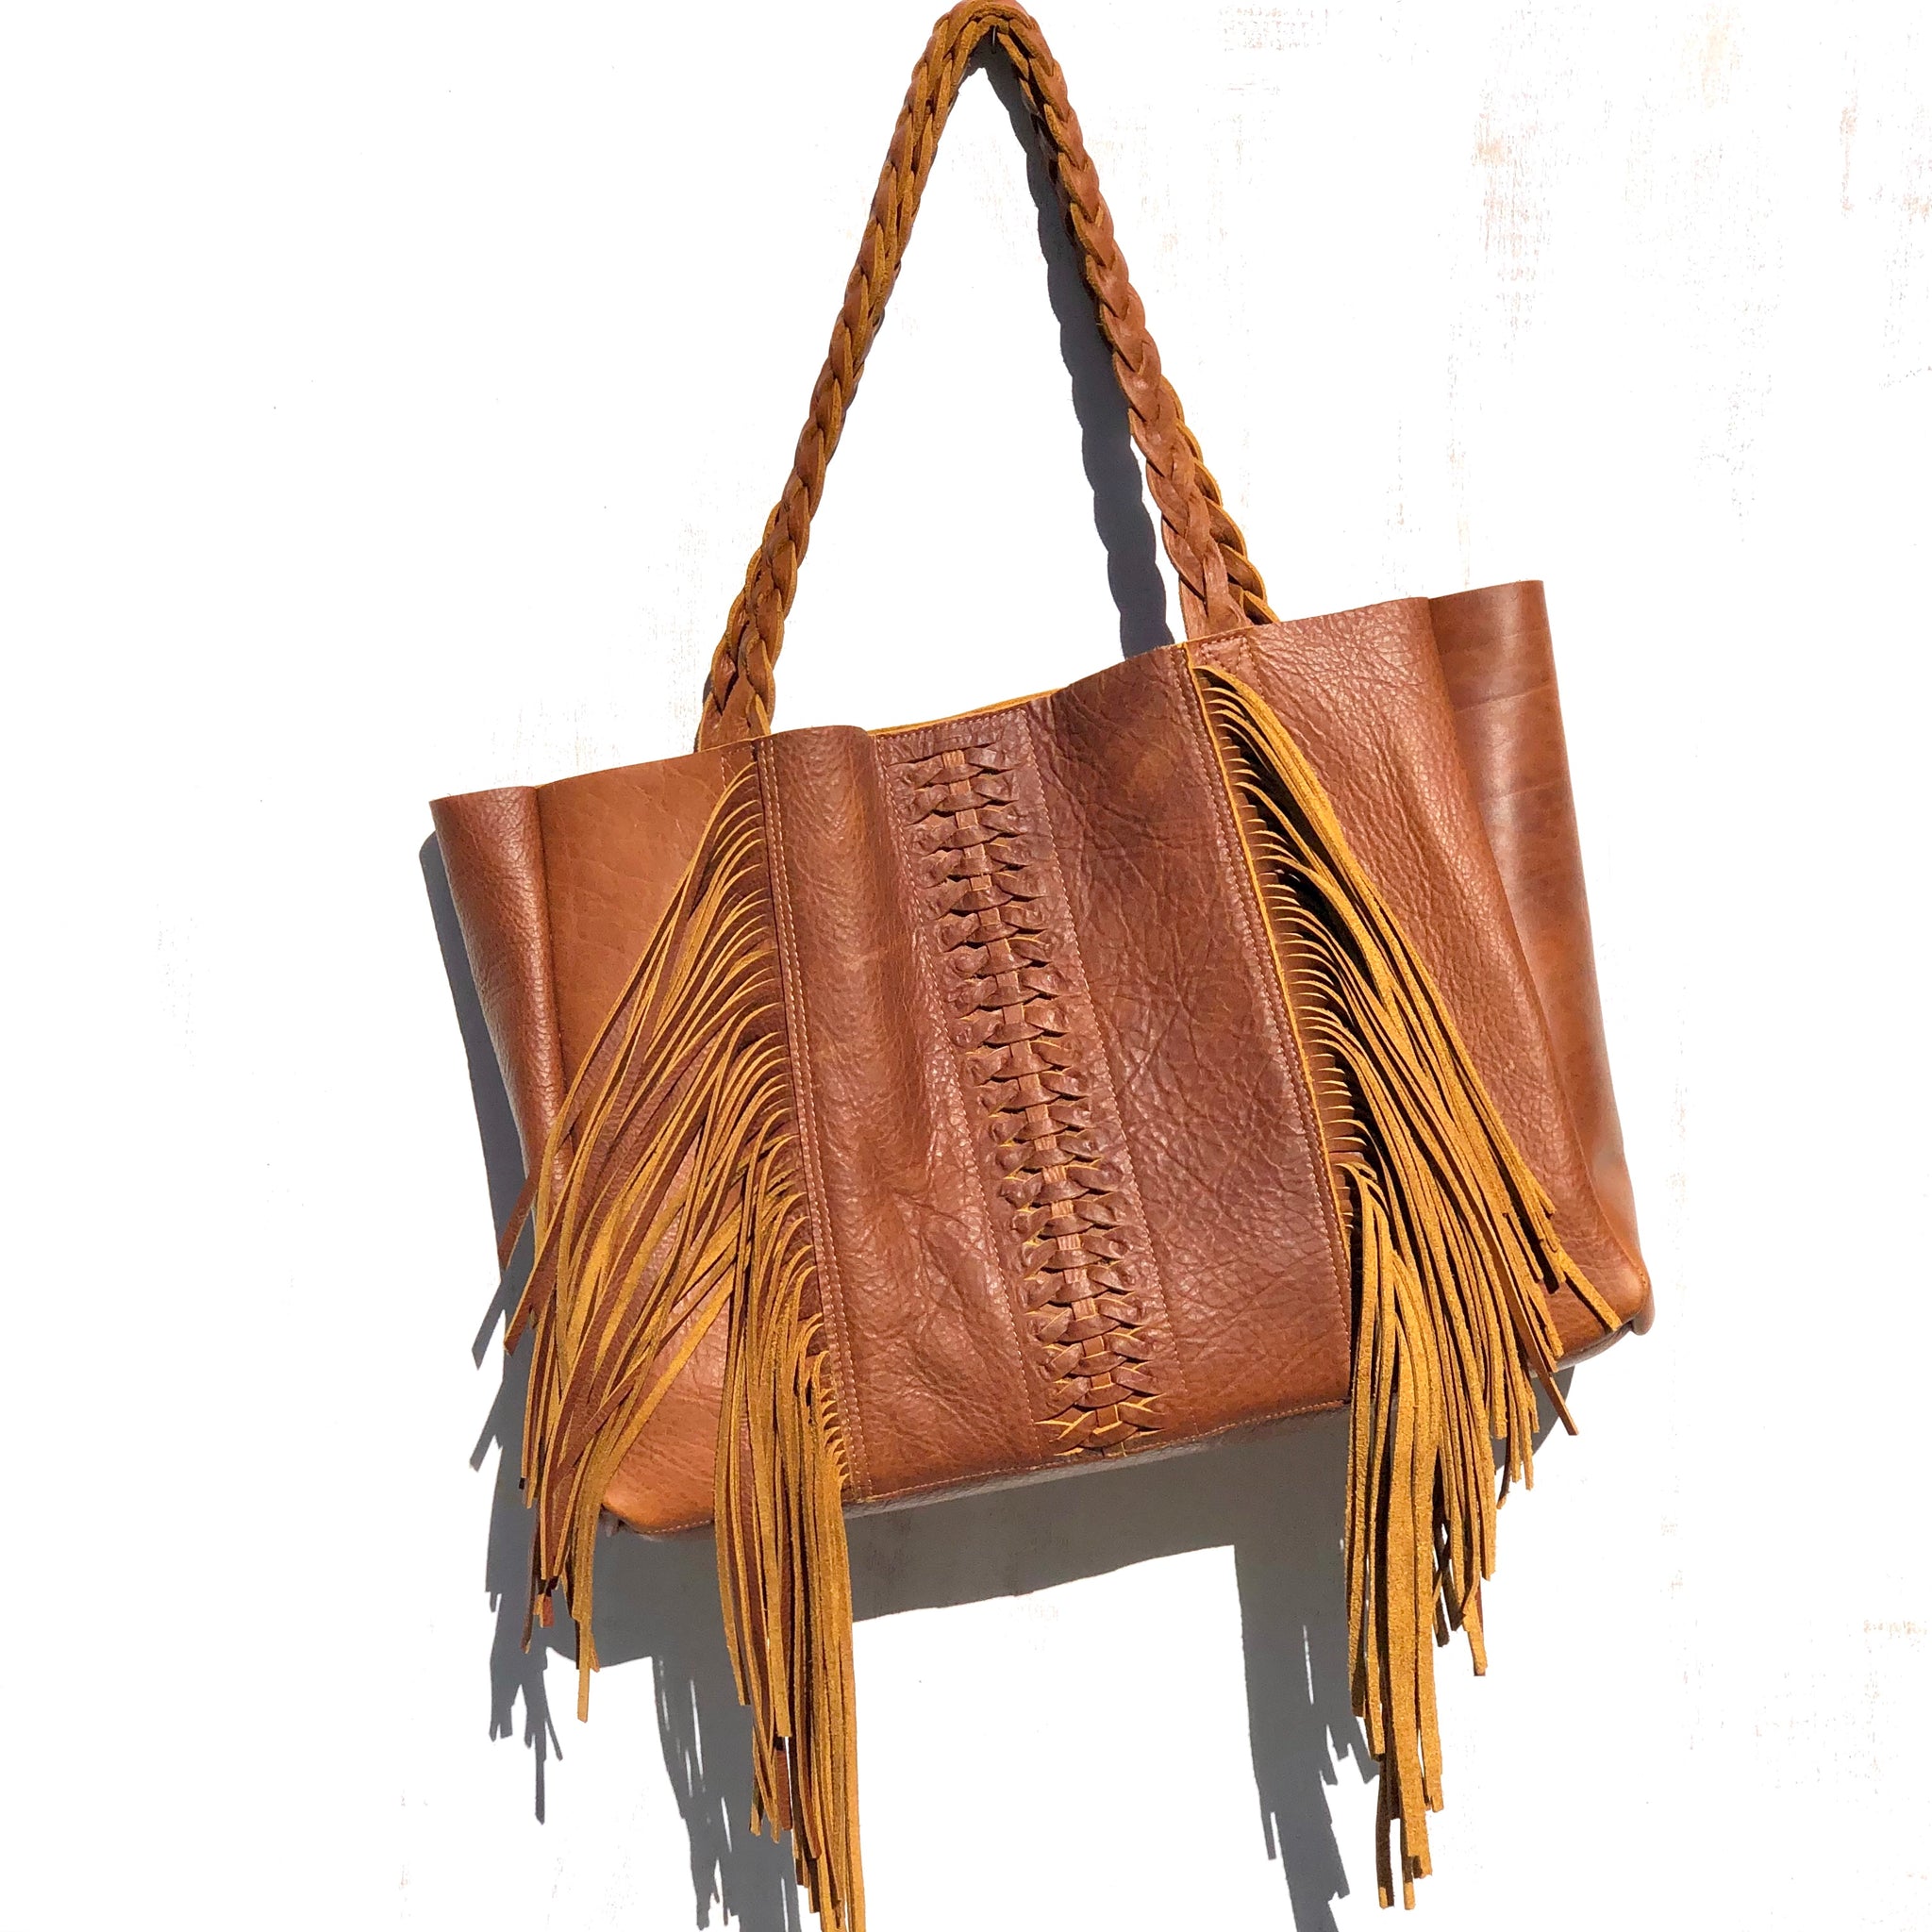 Cognac, boho chic braided leather bag